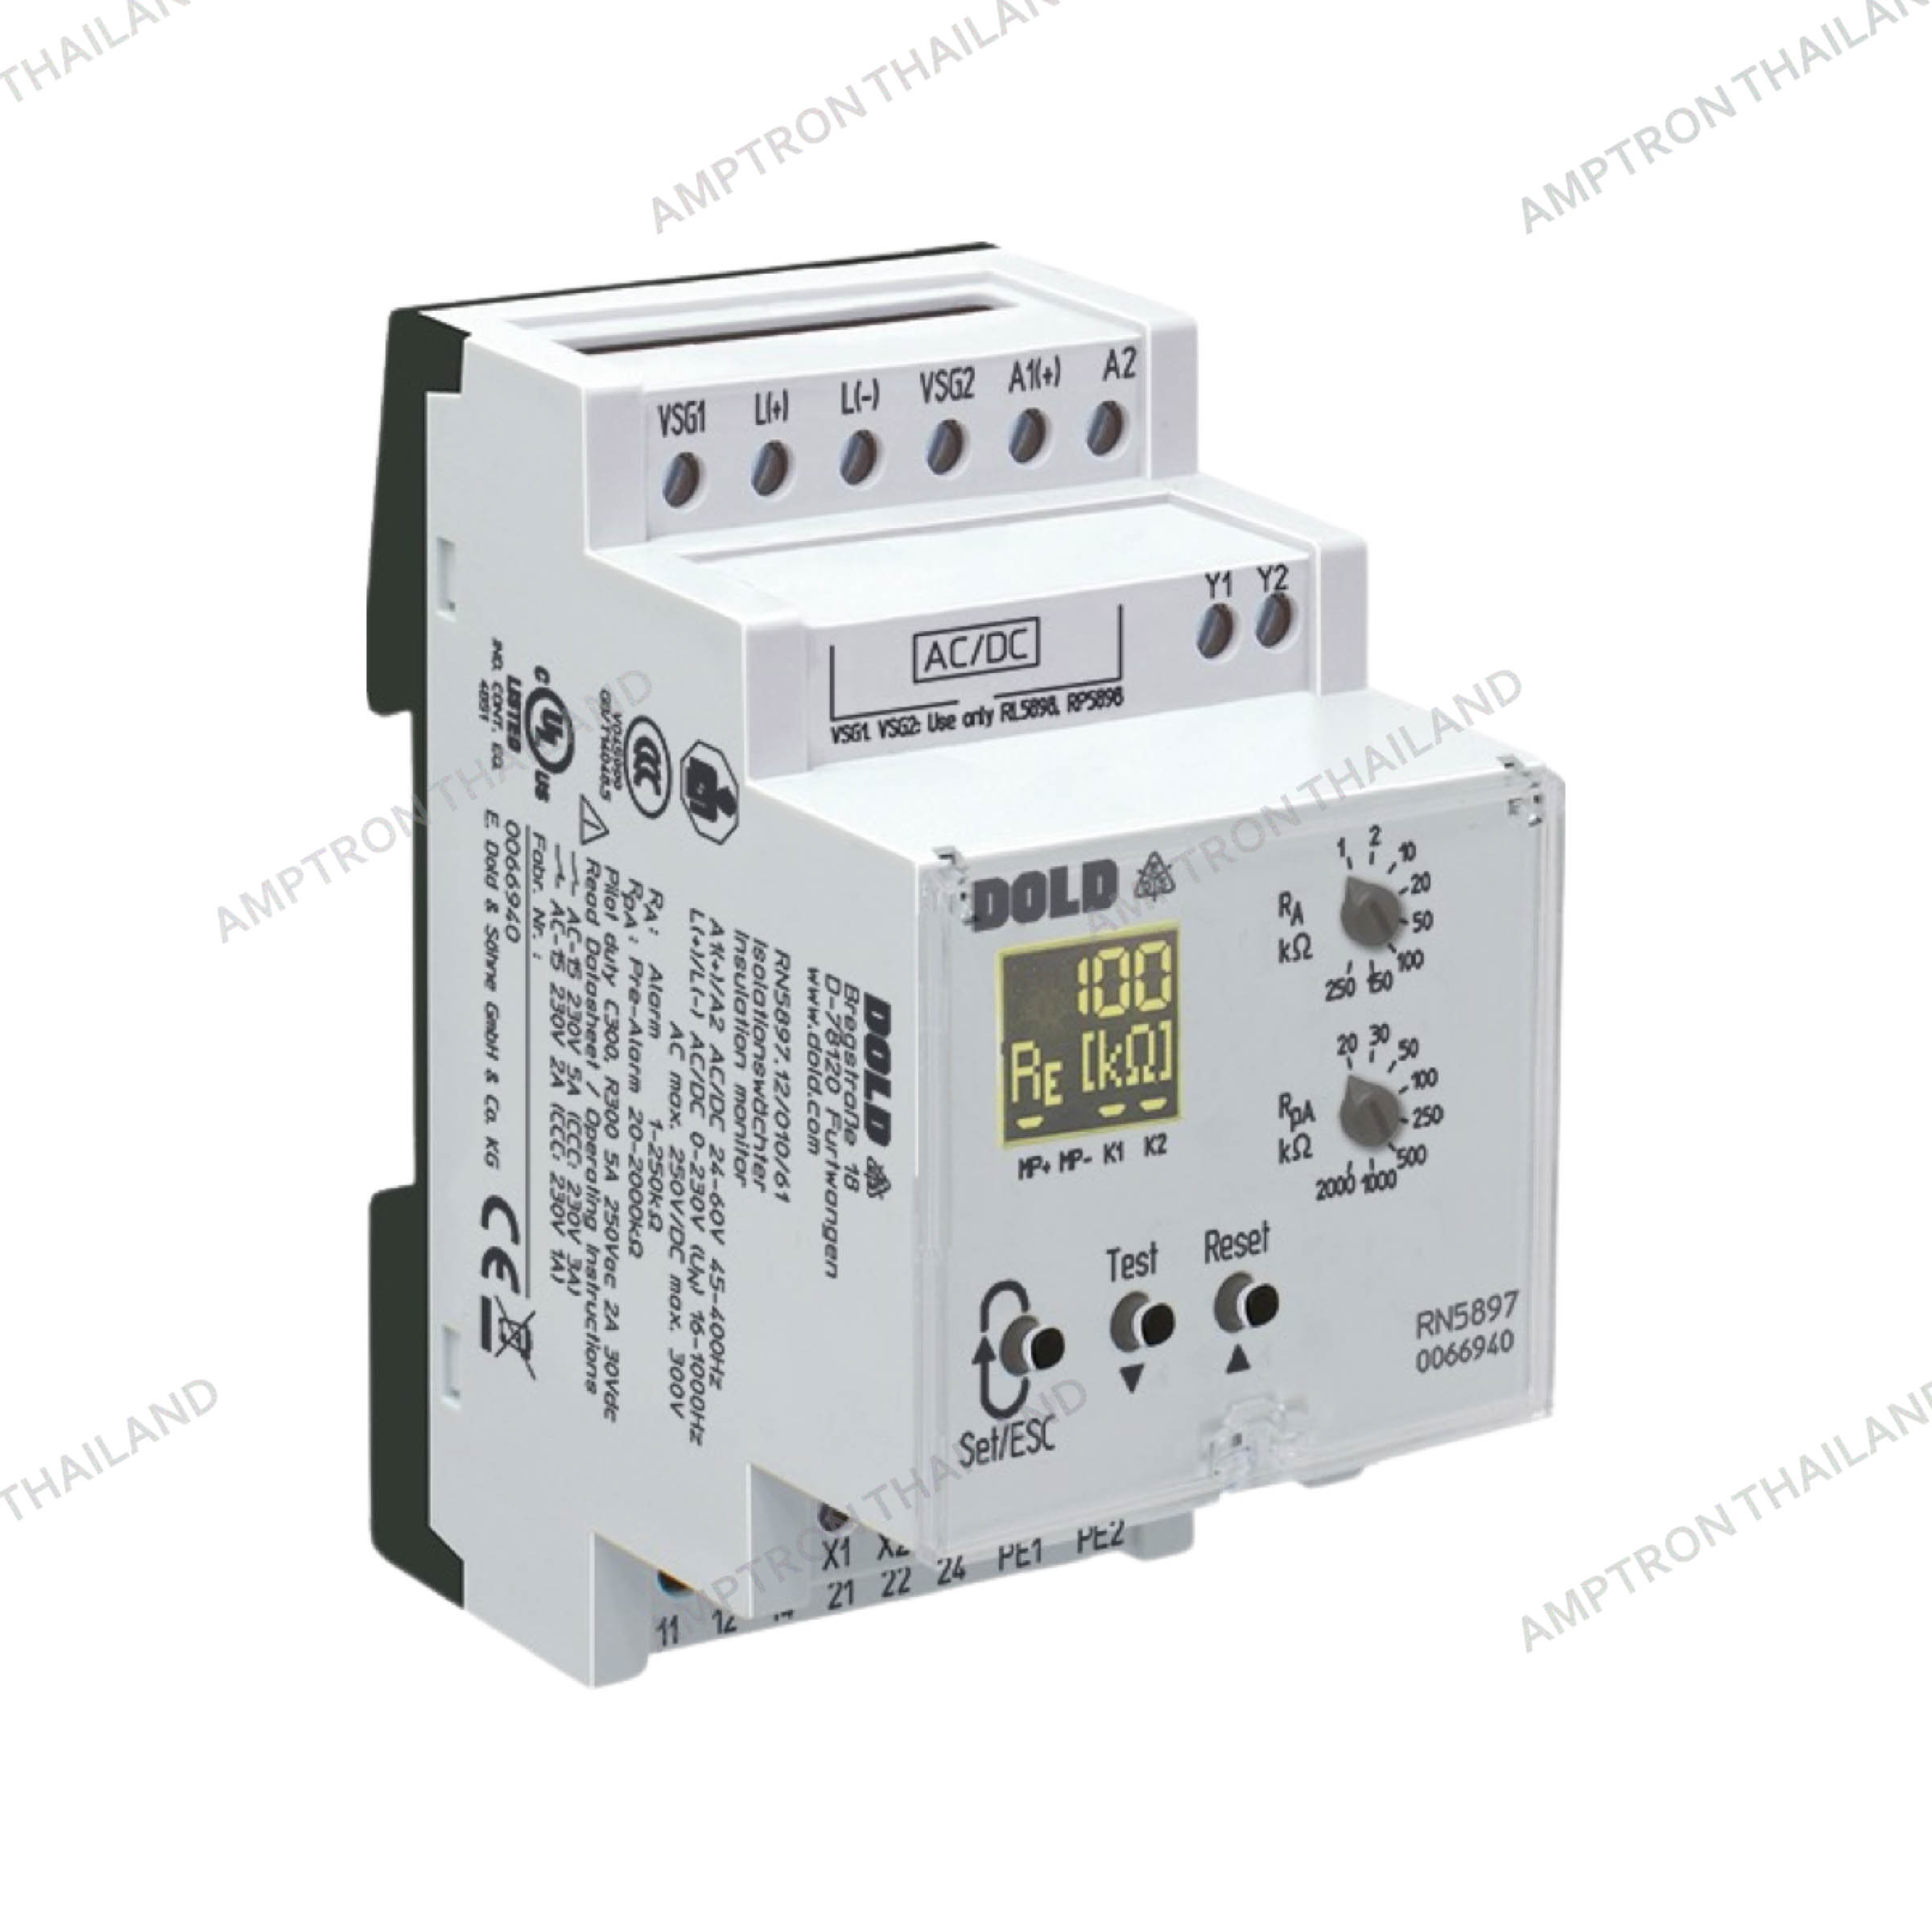 RN 5897/010 VARIMETER IMD Insulation monitor